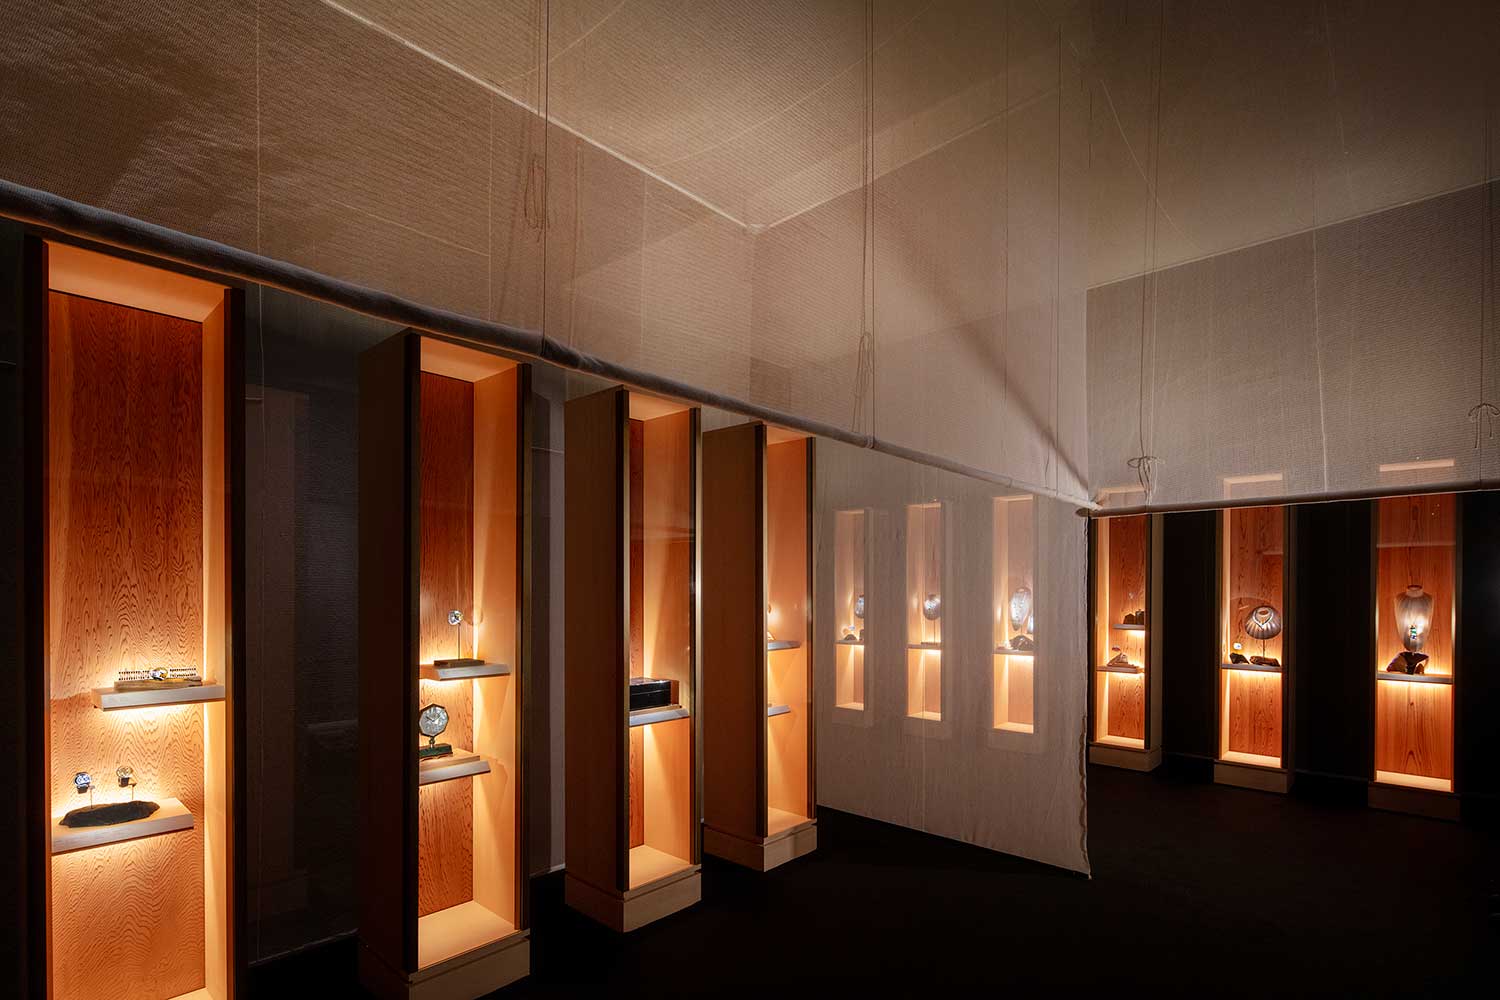 Cartier triễn lãm tại Seoul Dongdaemun Design Plaza